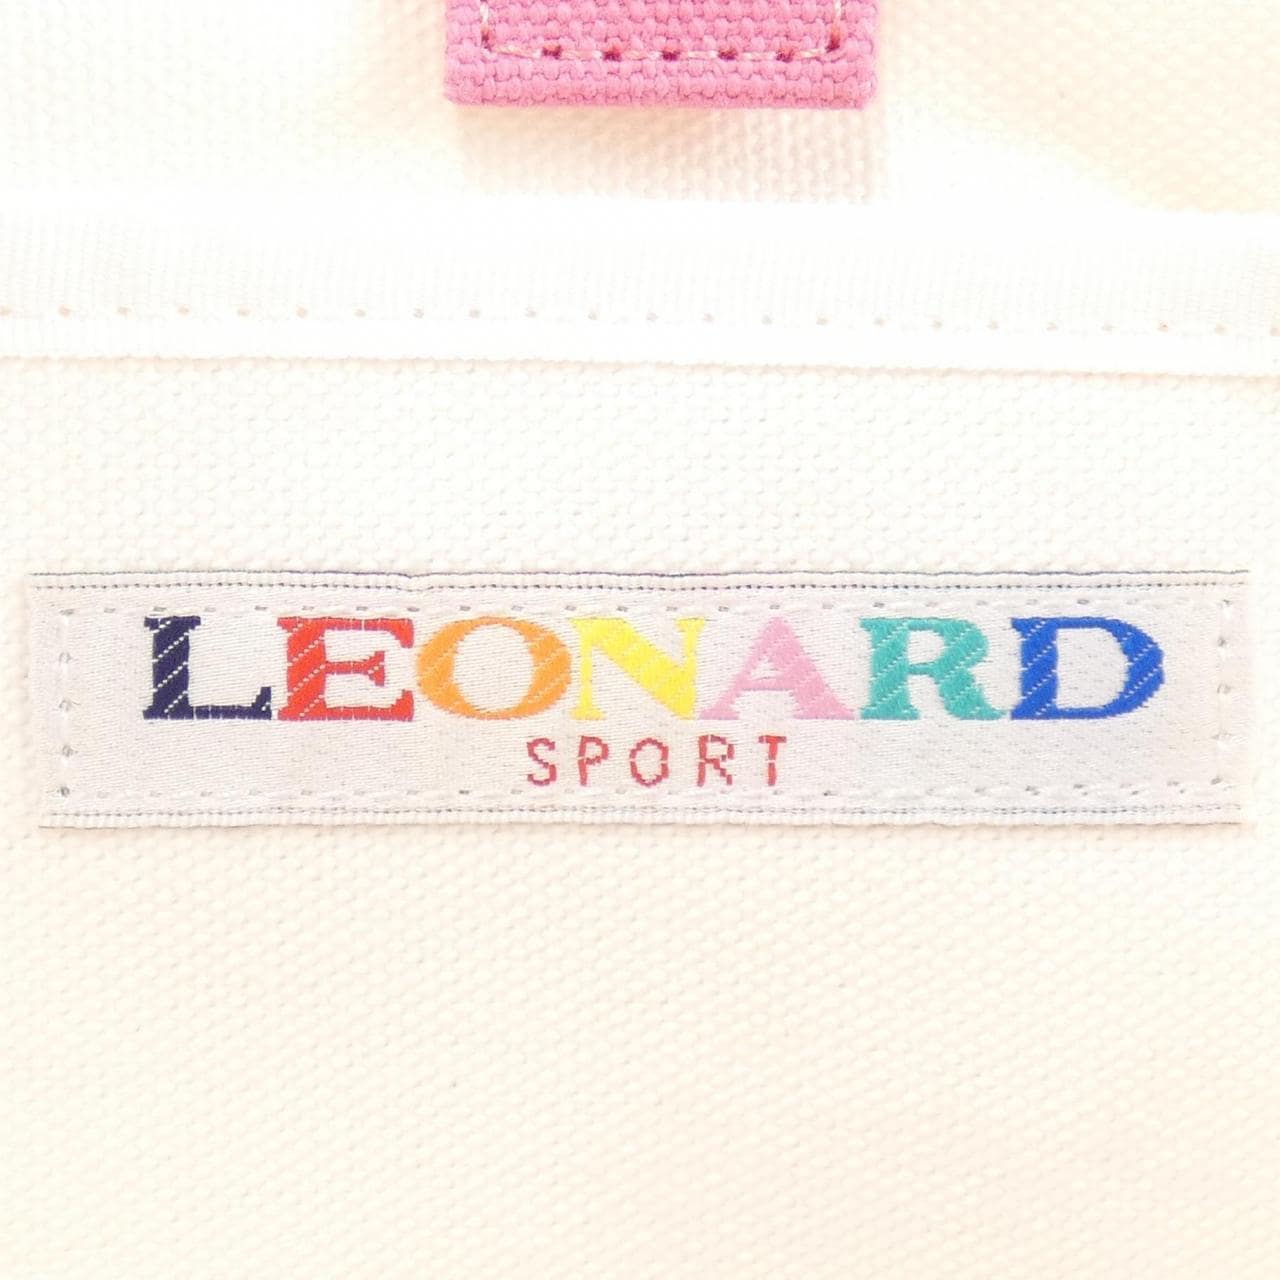 LEONARD SPORT BAG